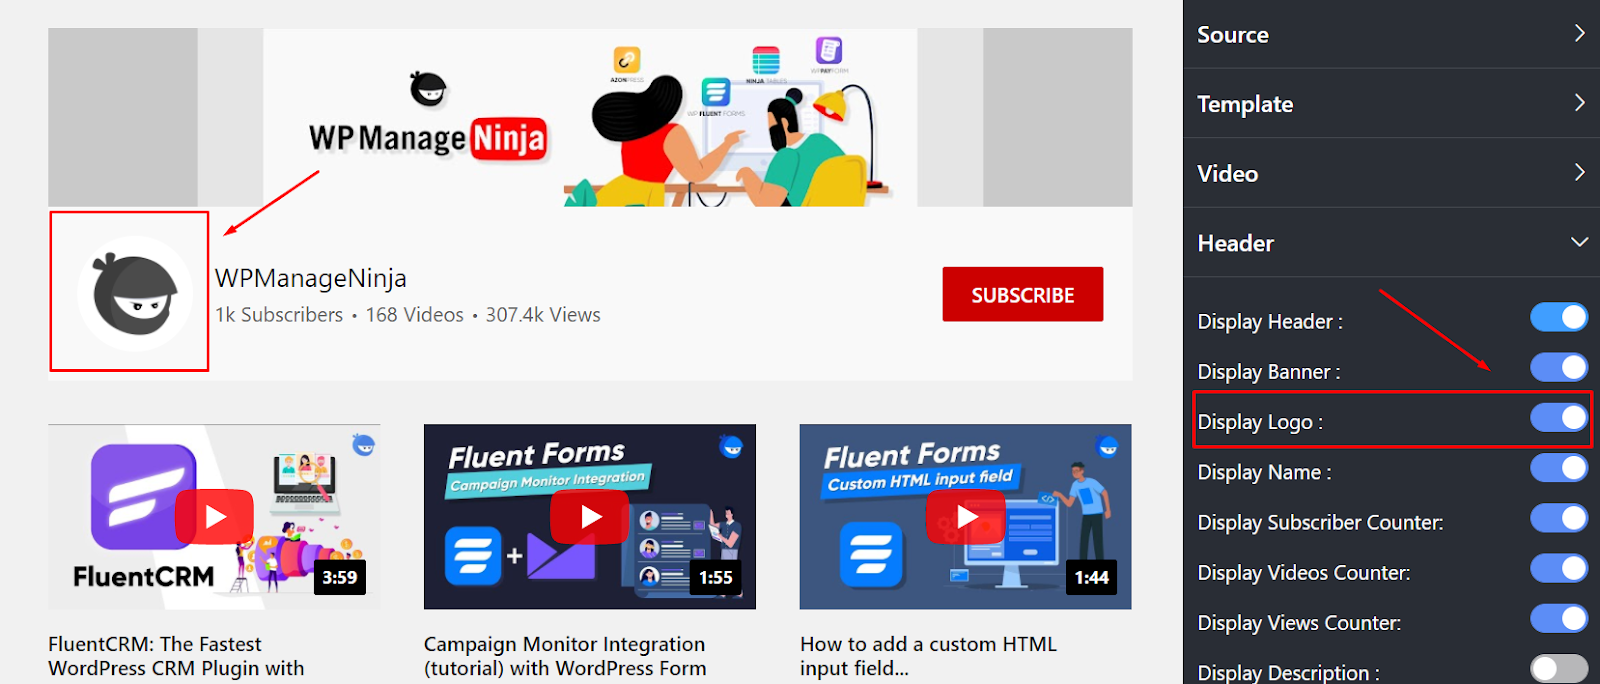 YouTube settings display logo